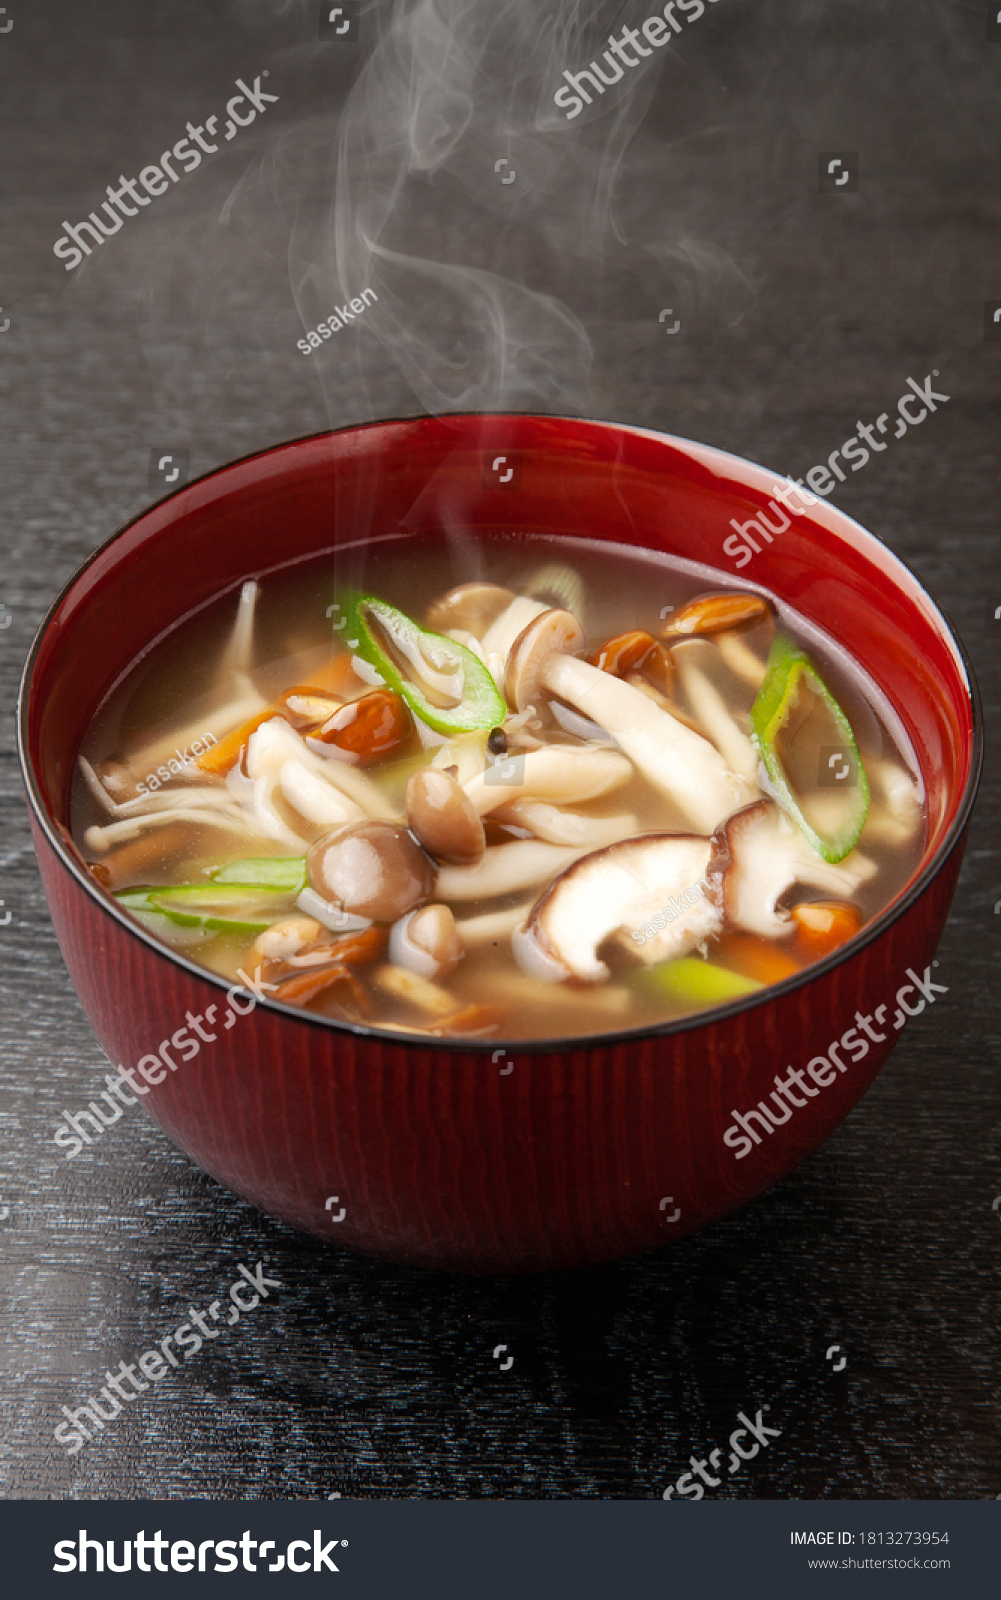 44 Kinoko Soup 图片 库存照片和矢量图 Shutterstock